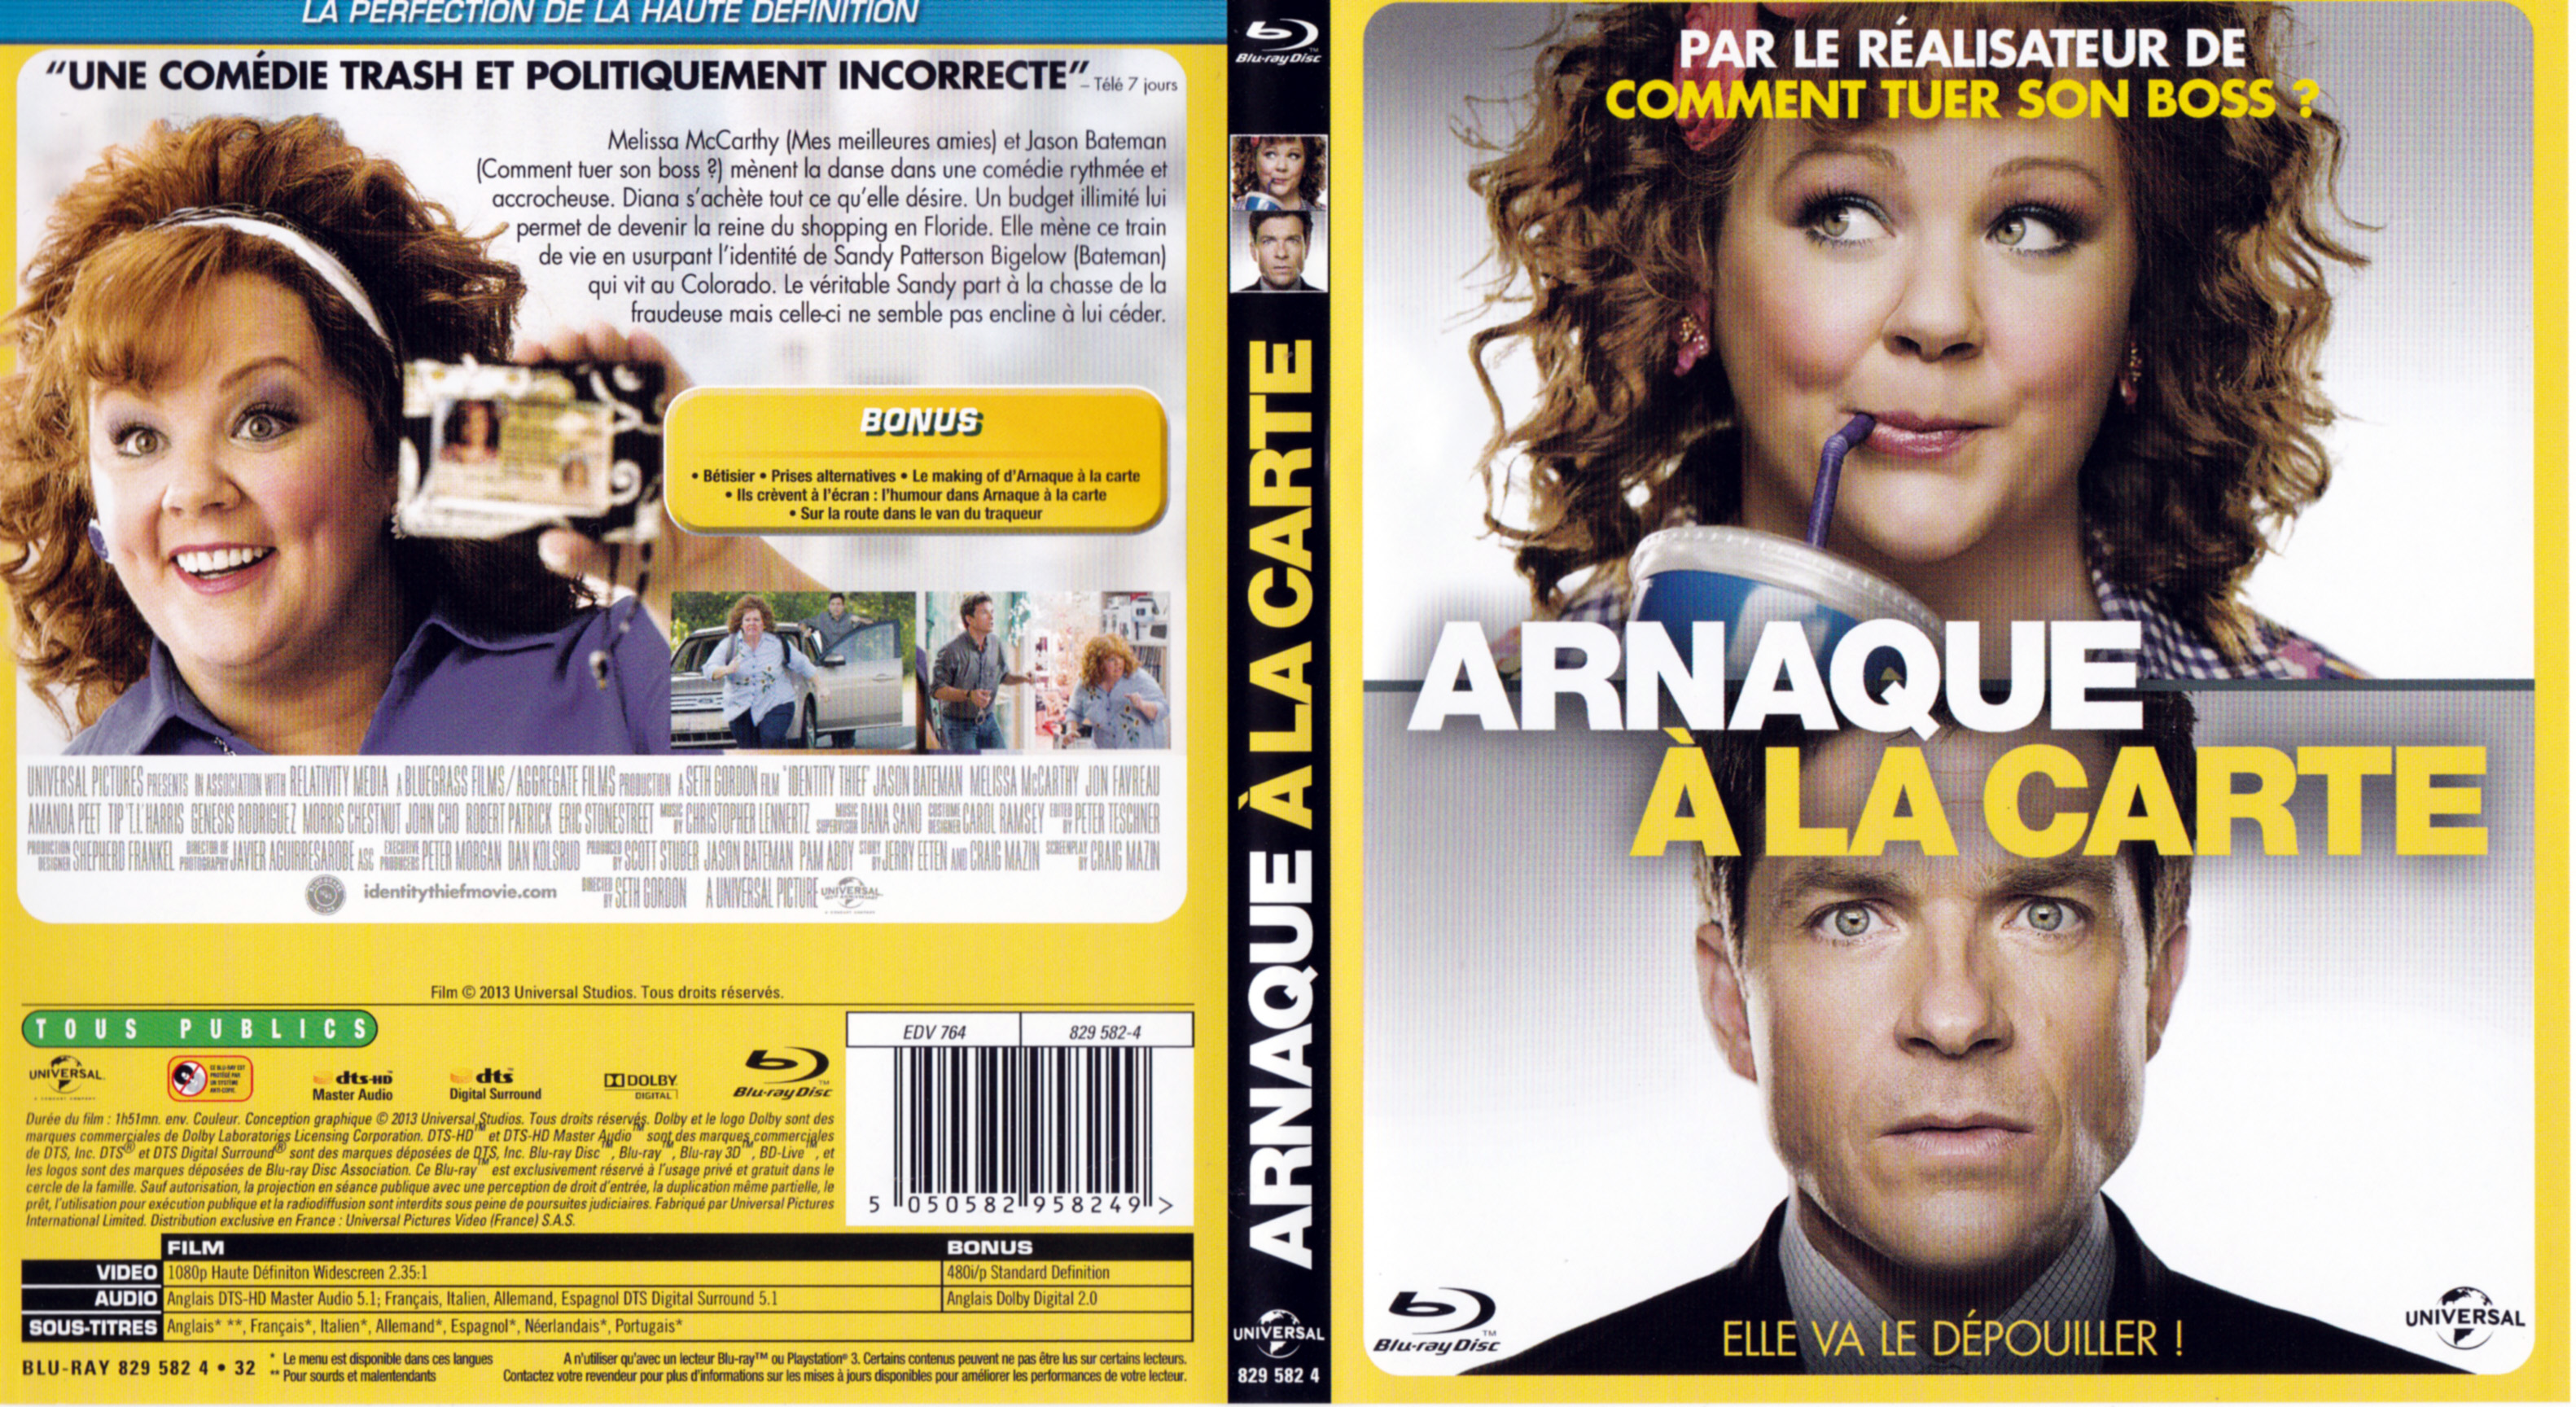 Jaquette DVD Arnaque  la carte (BLU-RAY)